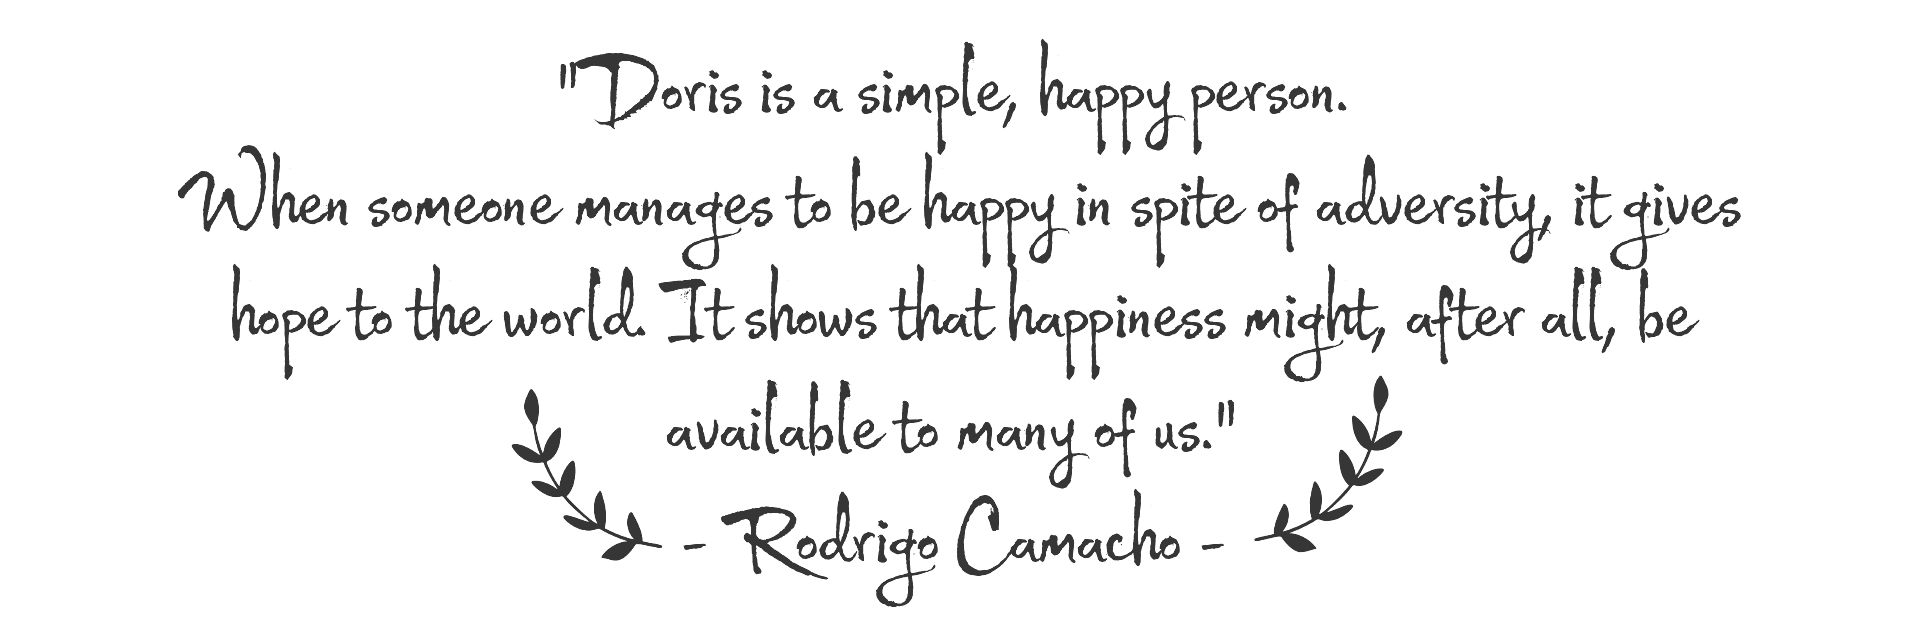 Doris Glück, quote Happiness, hope to the world, Rodrigo Camacho